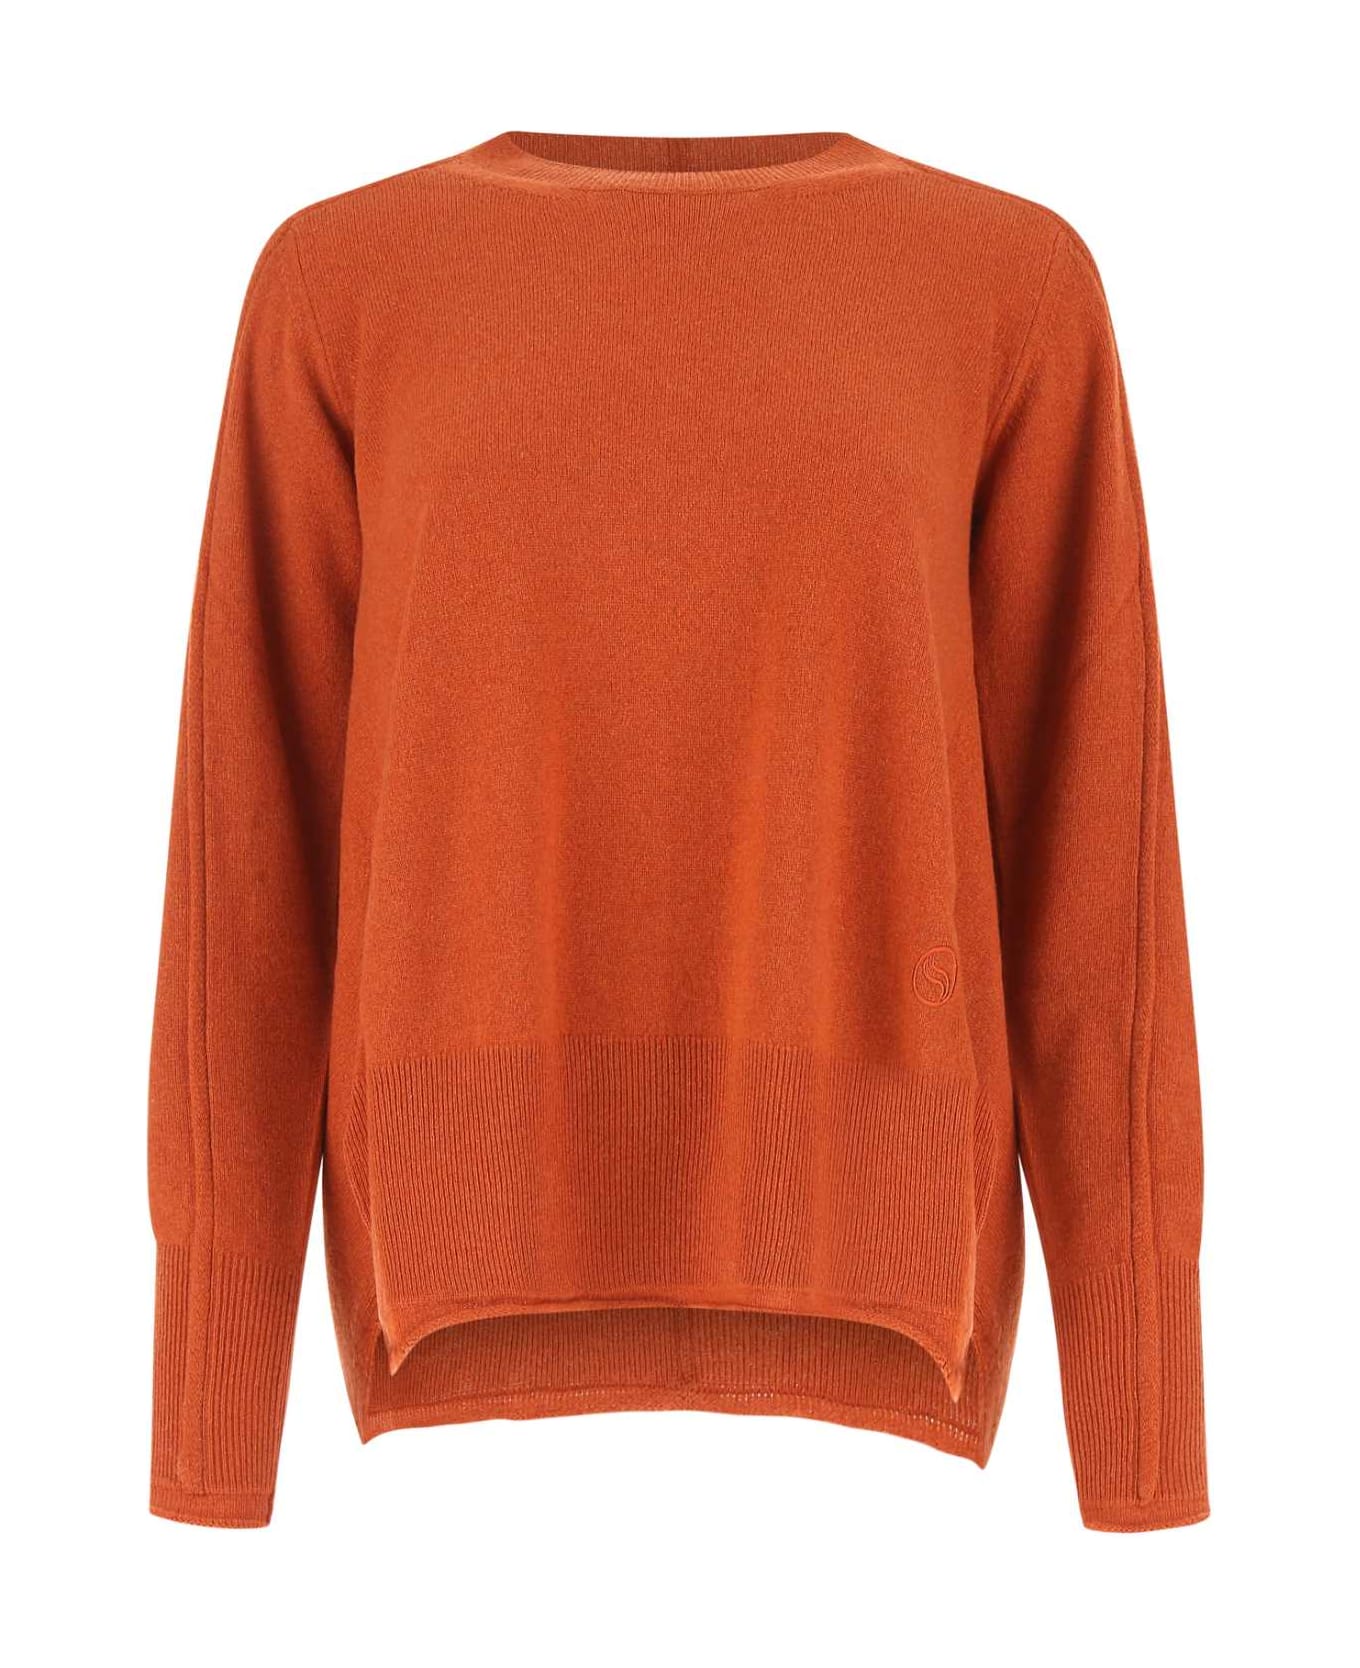 Stella McCartney Copper Cashmere Blend Oversize Sweater - 6302 ニットウェア